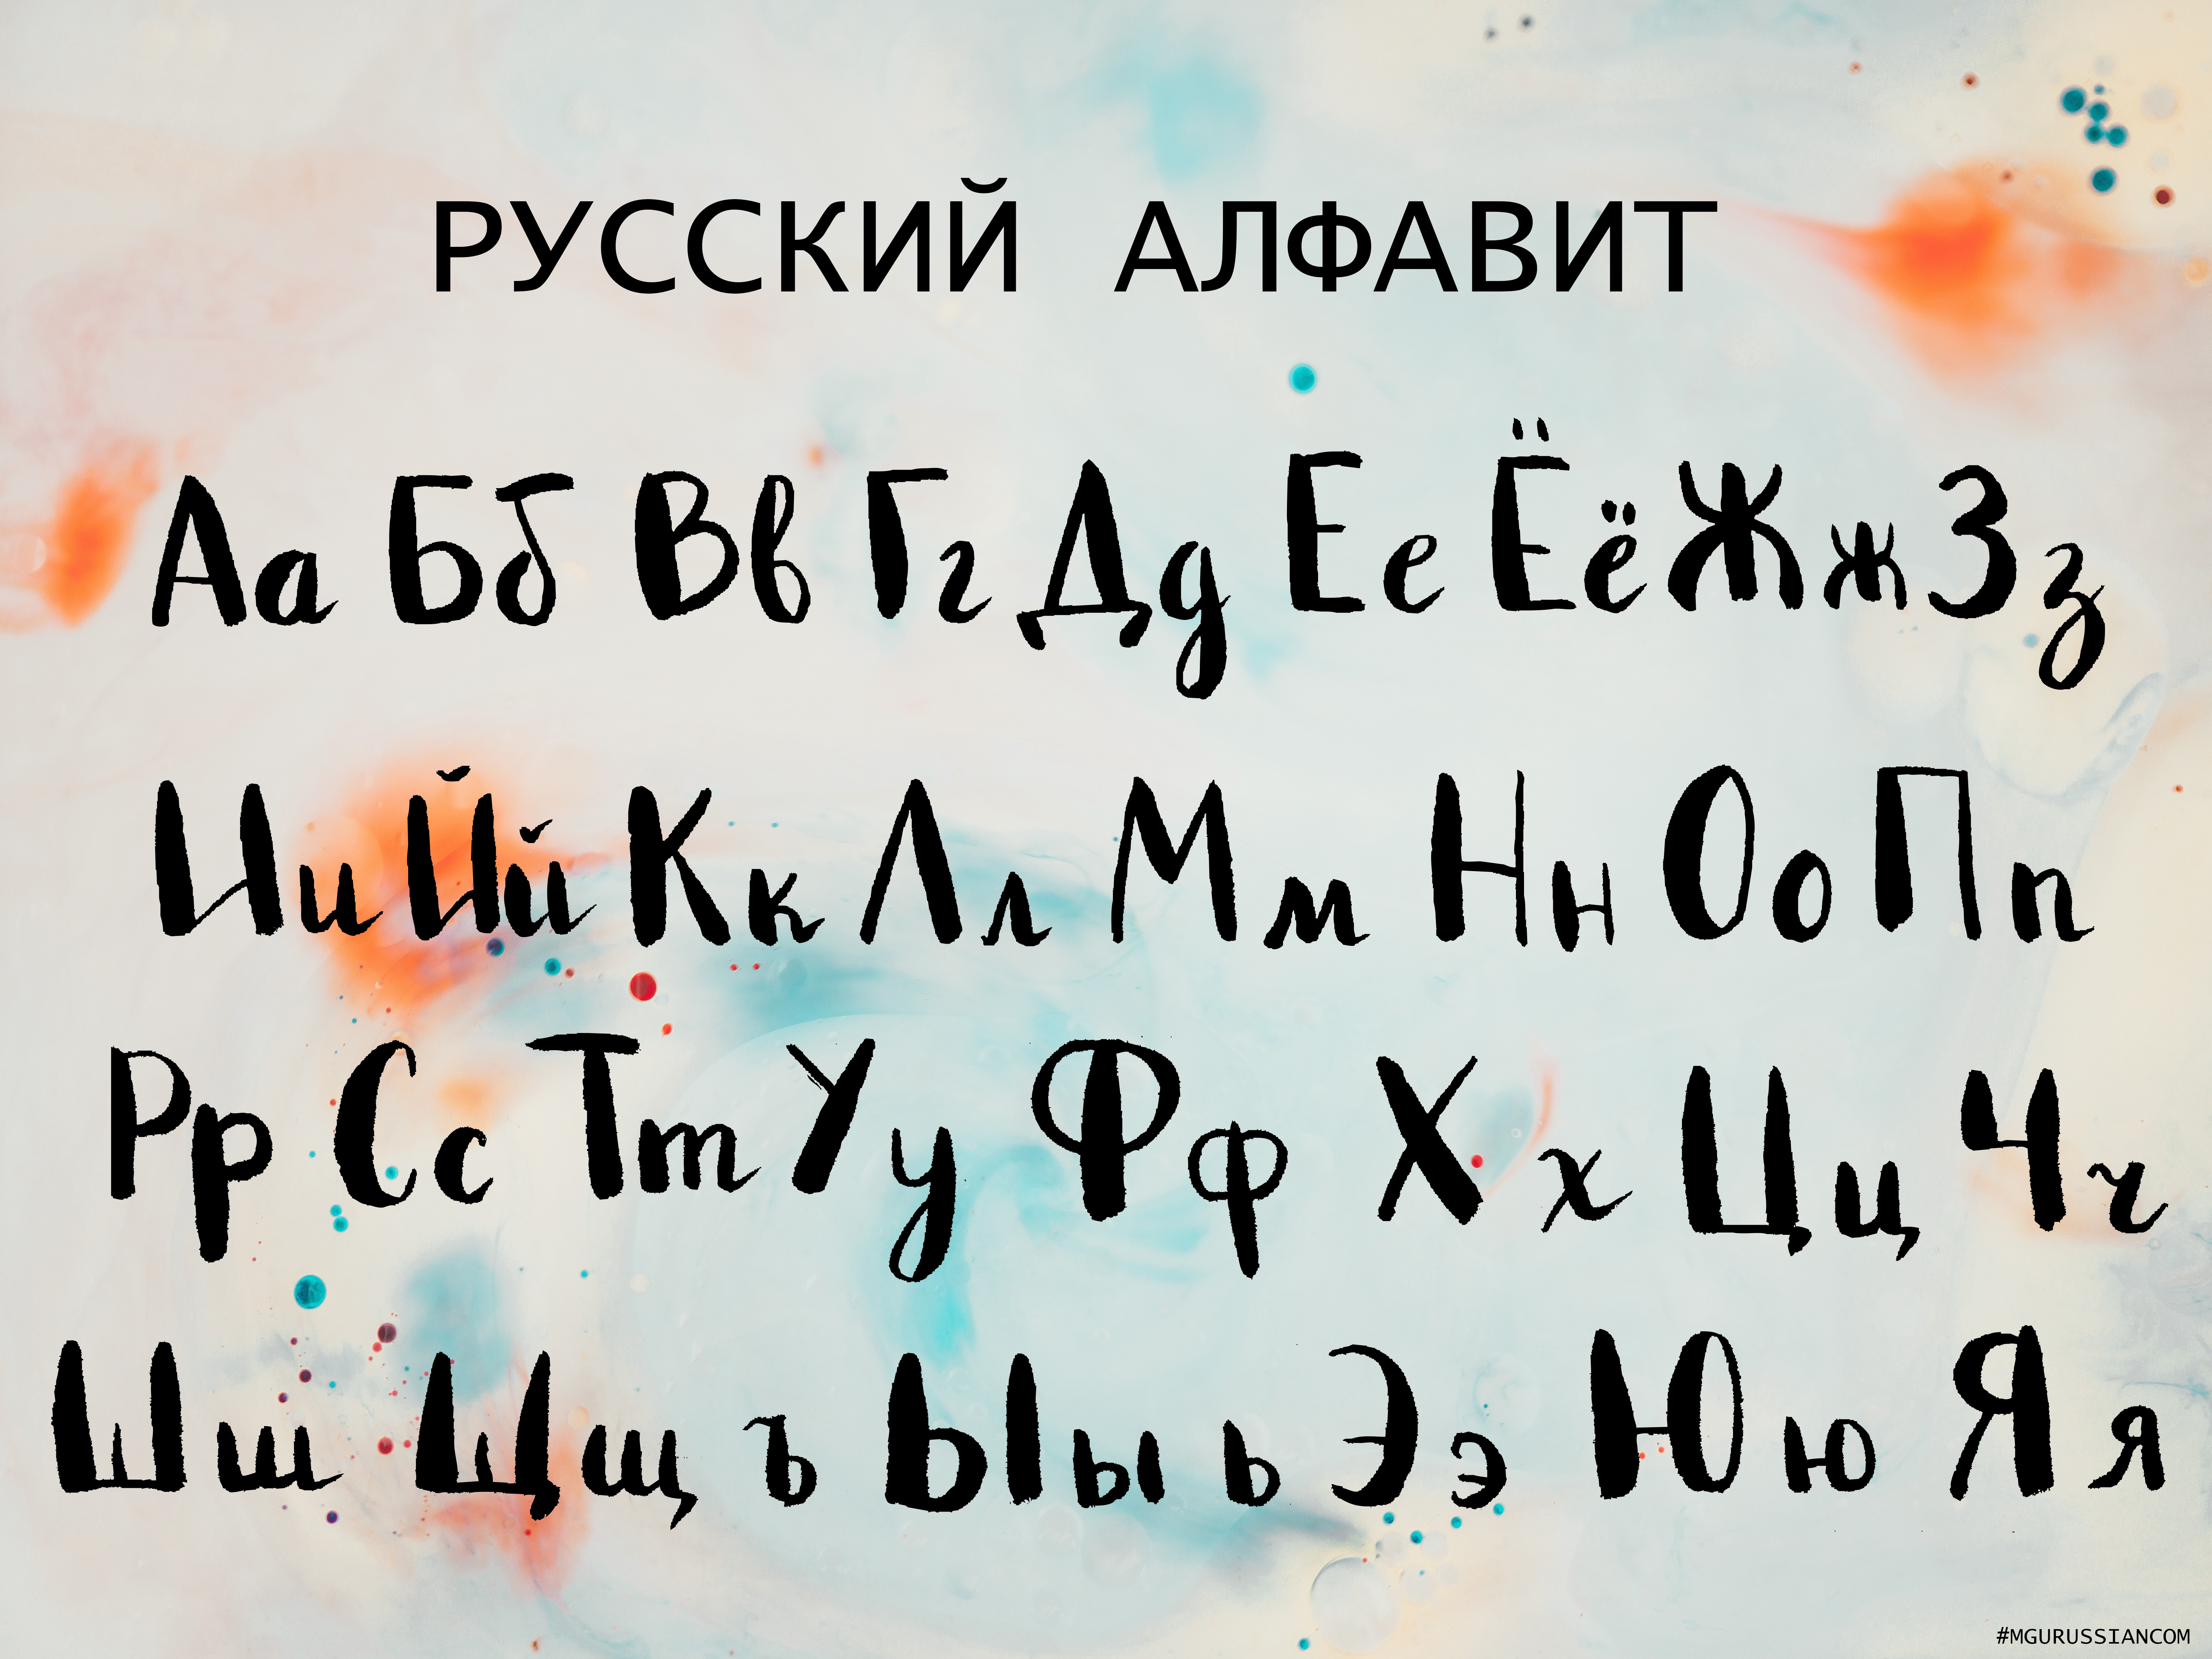 Study The Russian Alphabet Pronunciation